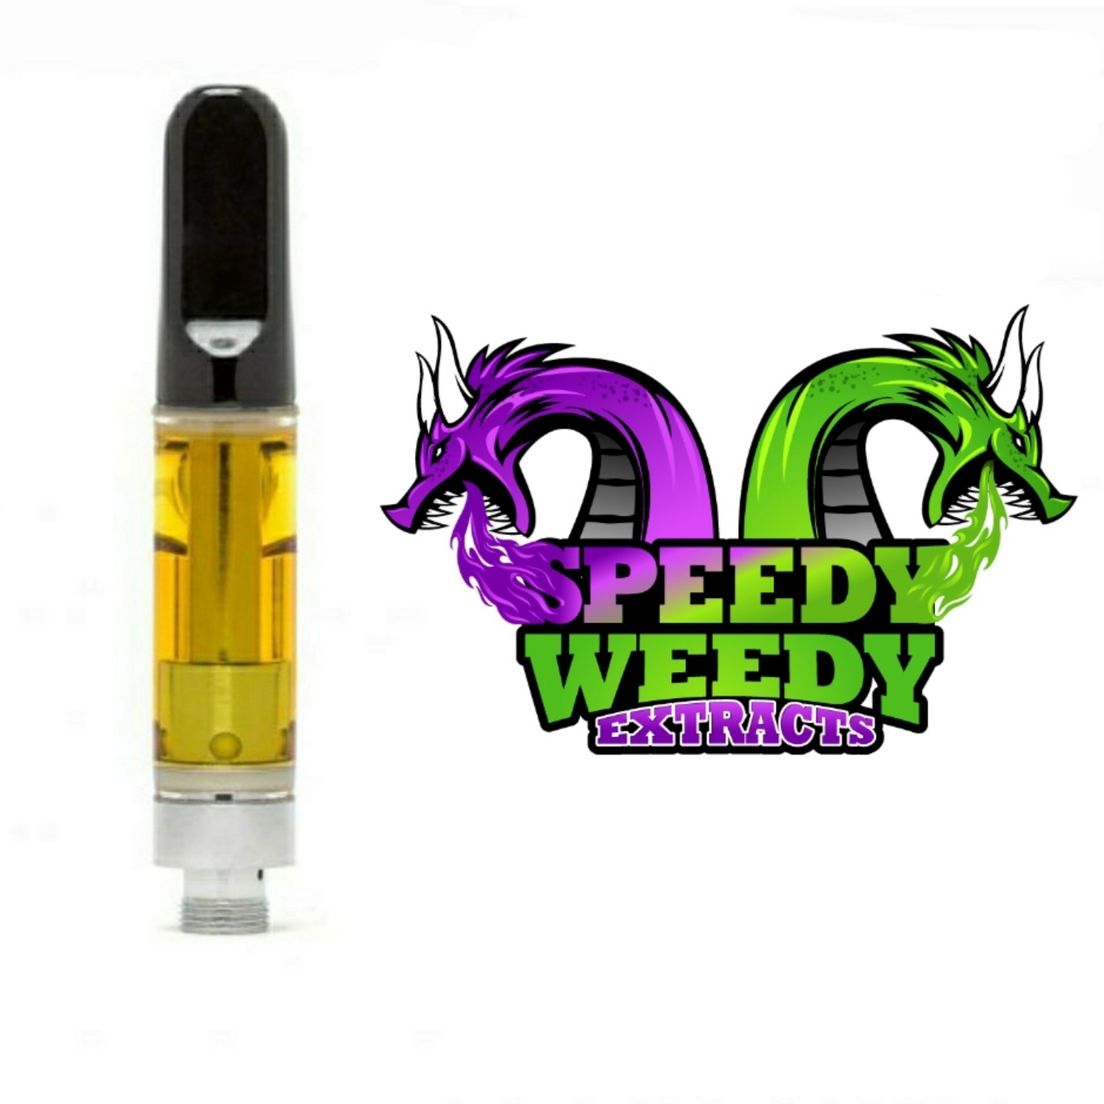 1. Speedy Weedy 1g THC Vape Cartridge - Ghost Train Haze (S) 3/$60